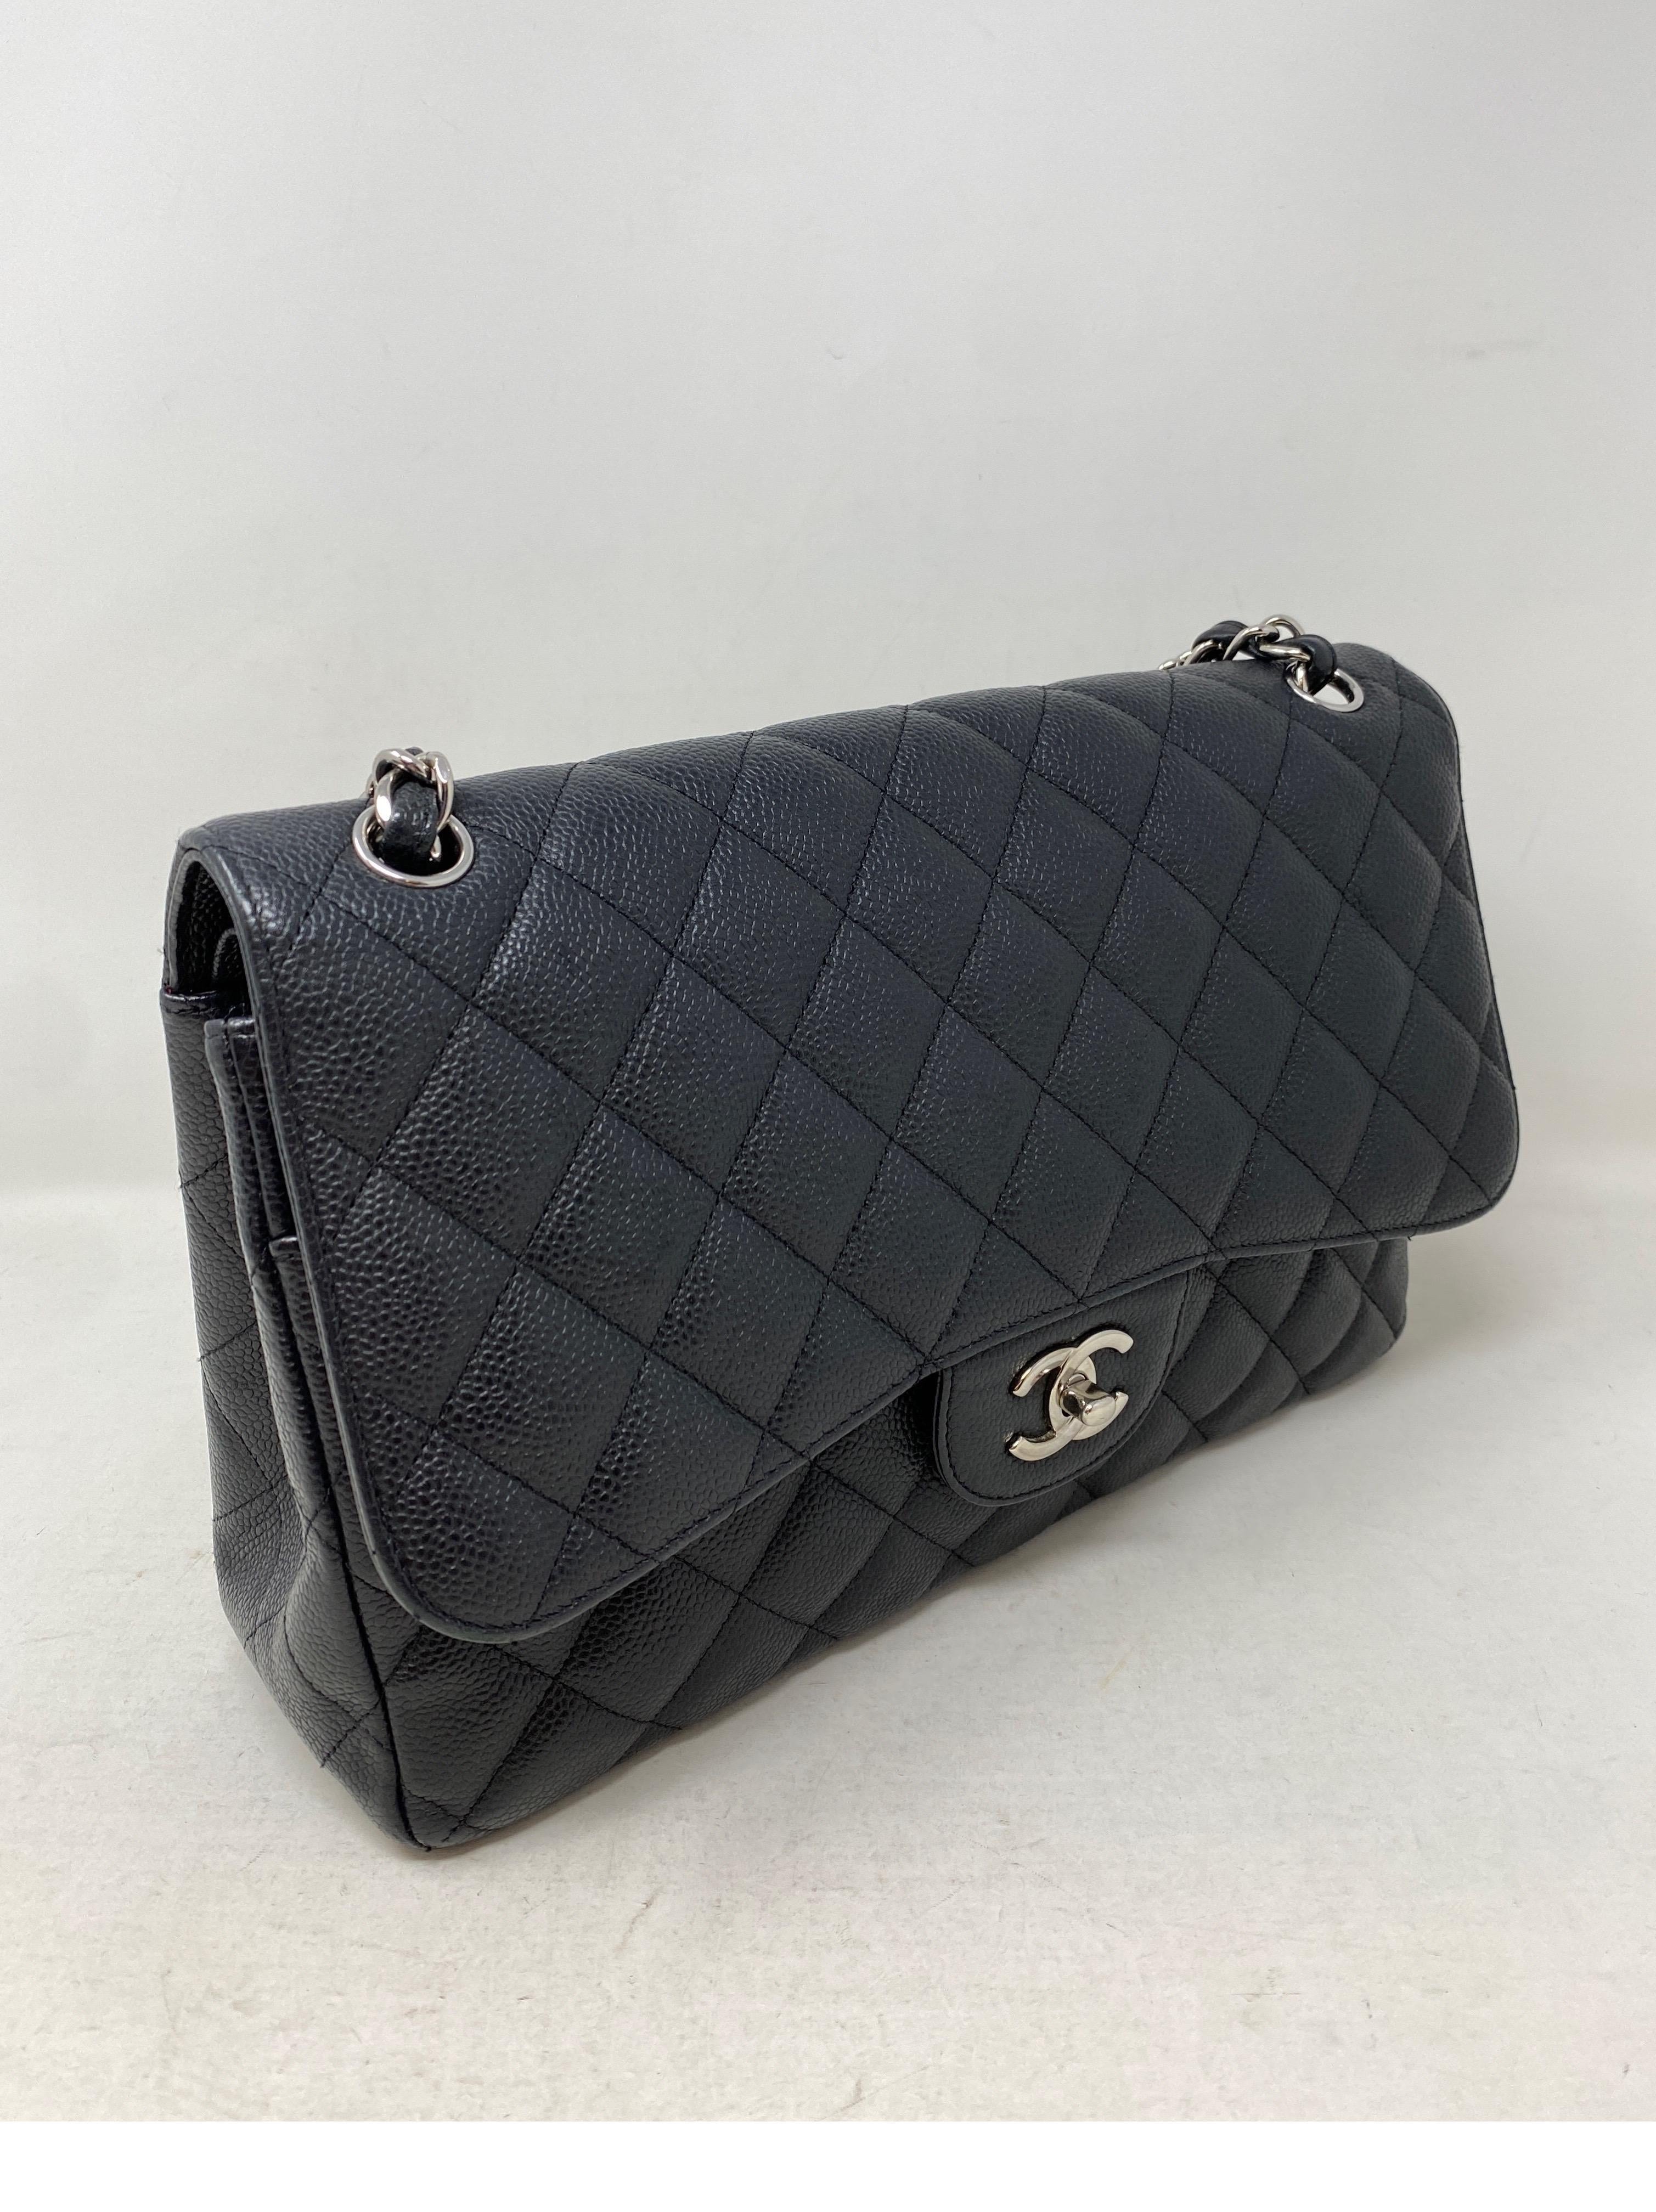 Chanel Dark Navy Jumbo Bag. Ruthenium hardware. Rare dark navy blue color. Double flap bag. Mint like new condition. Guaranteed authentic. 